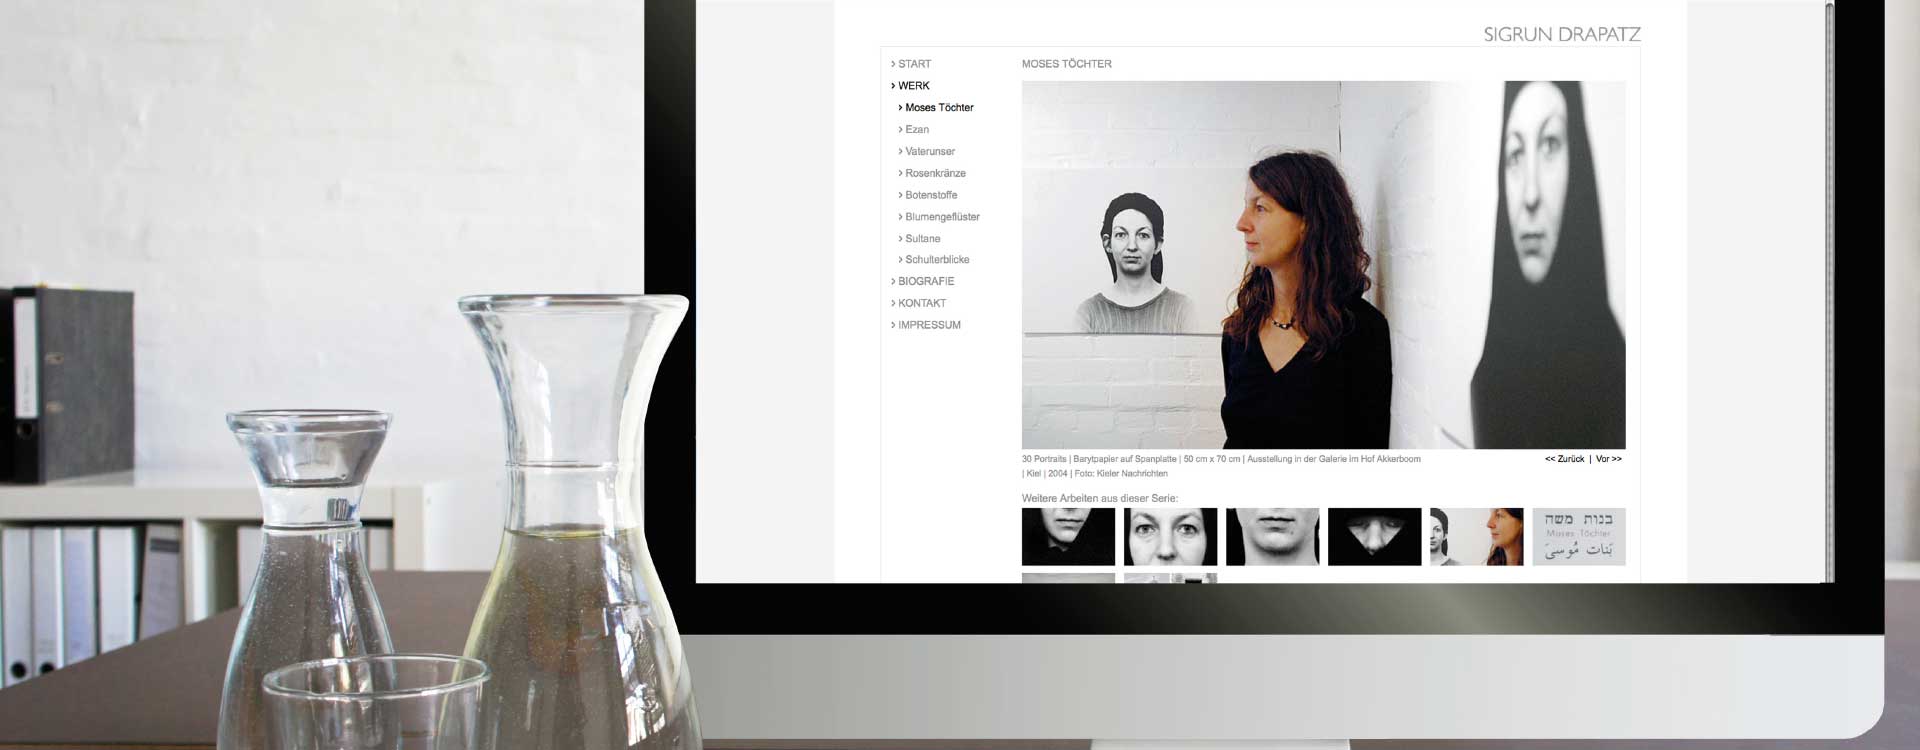 Website for the art of Sigrun Drapatz; Design: Kattrin Richter | Graphic Design Studio